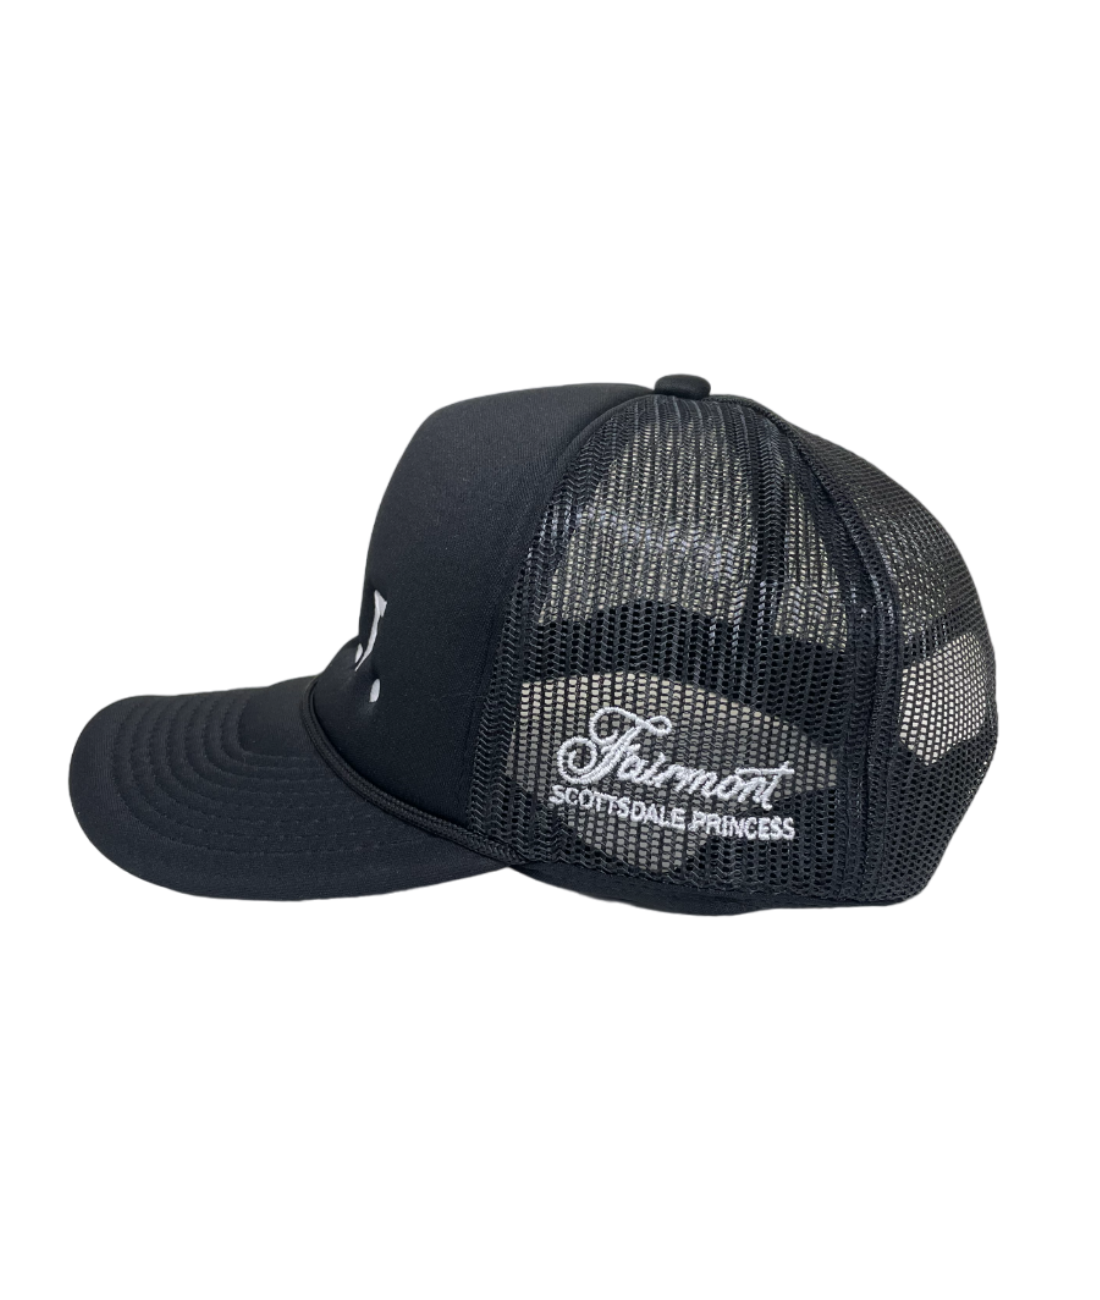 Black Golf Trucker Hat